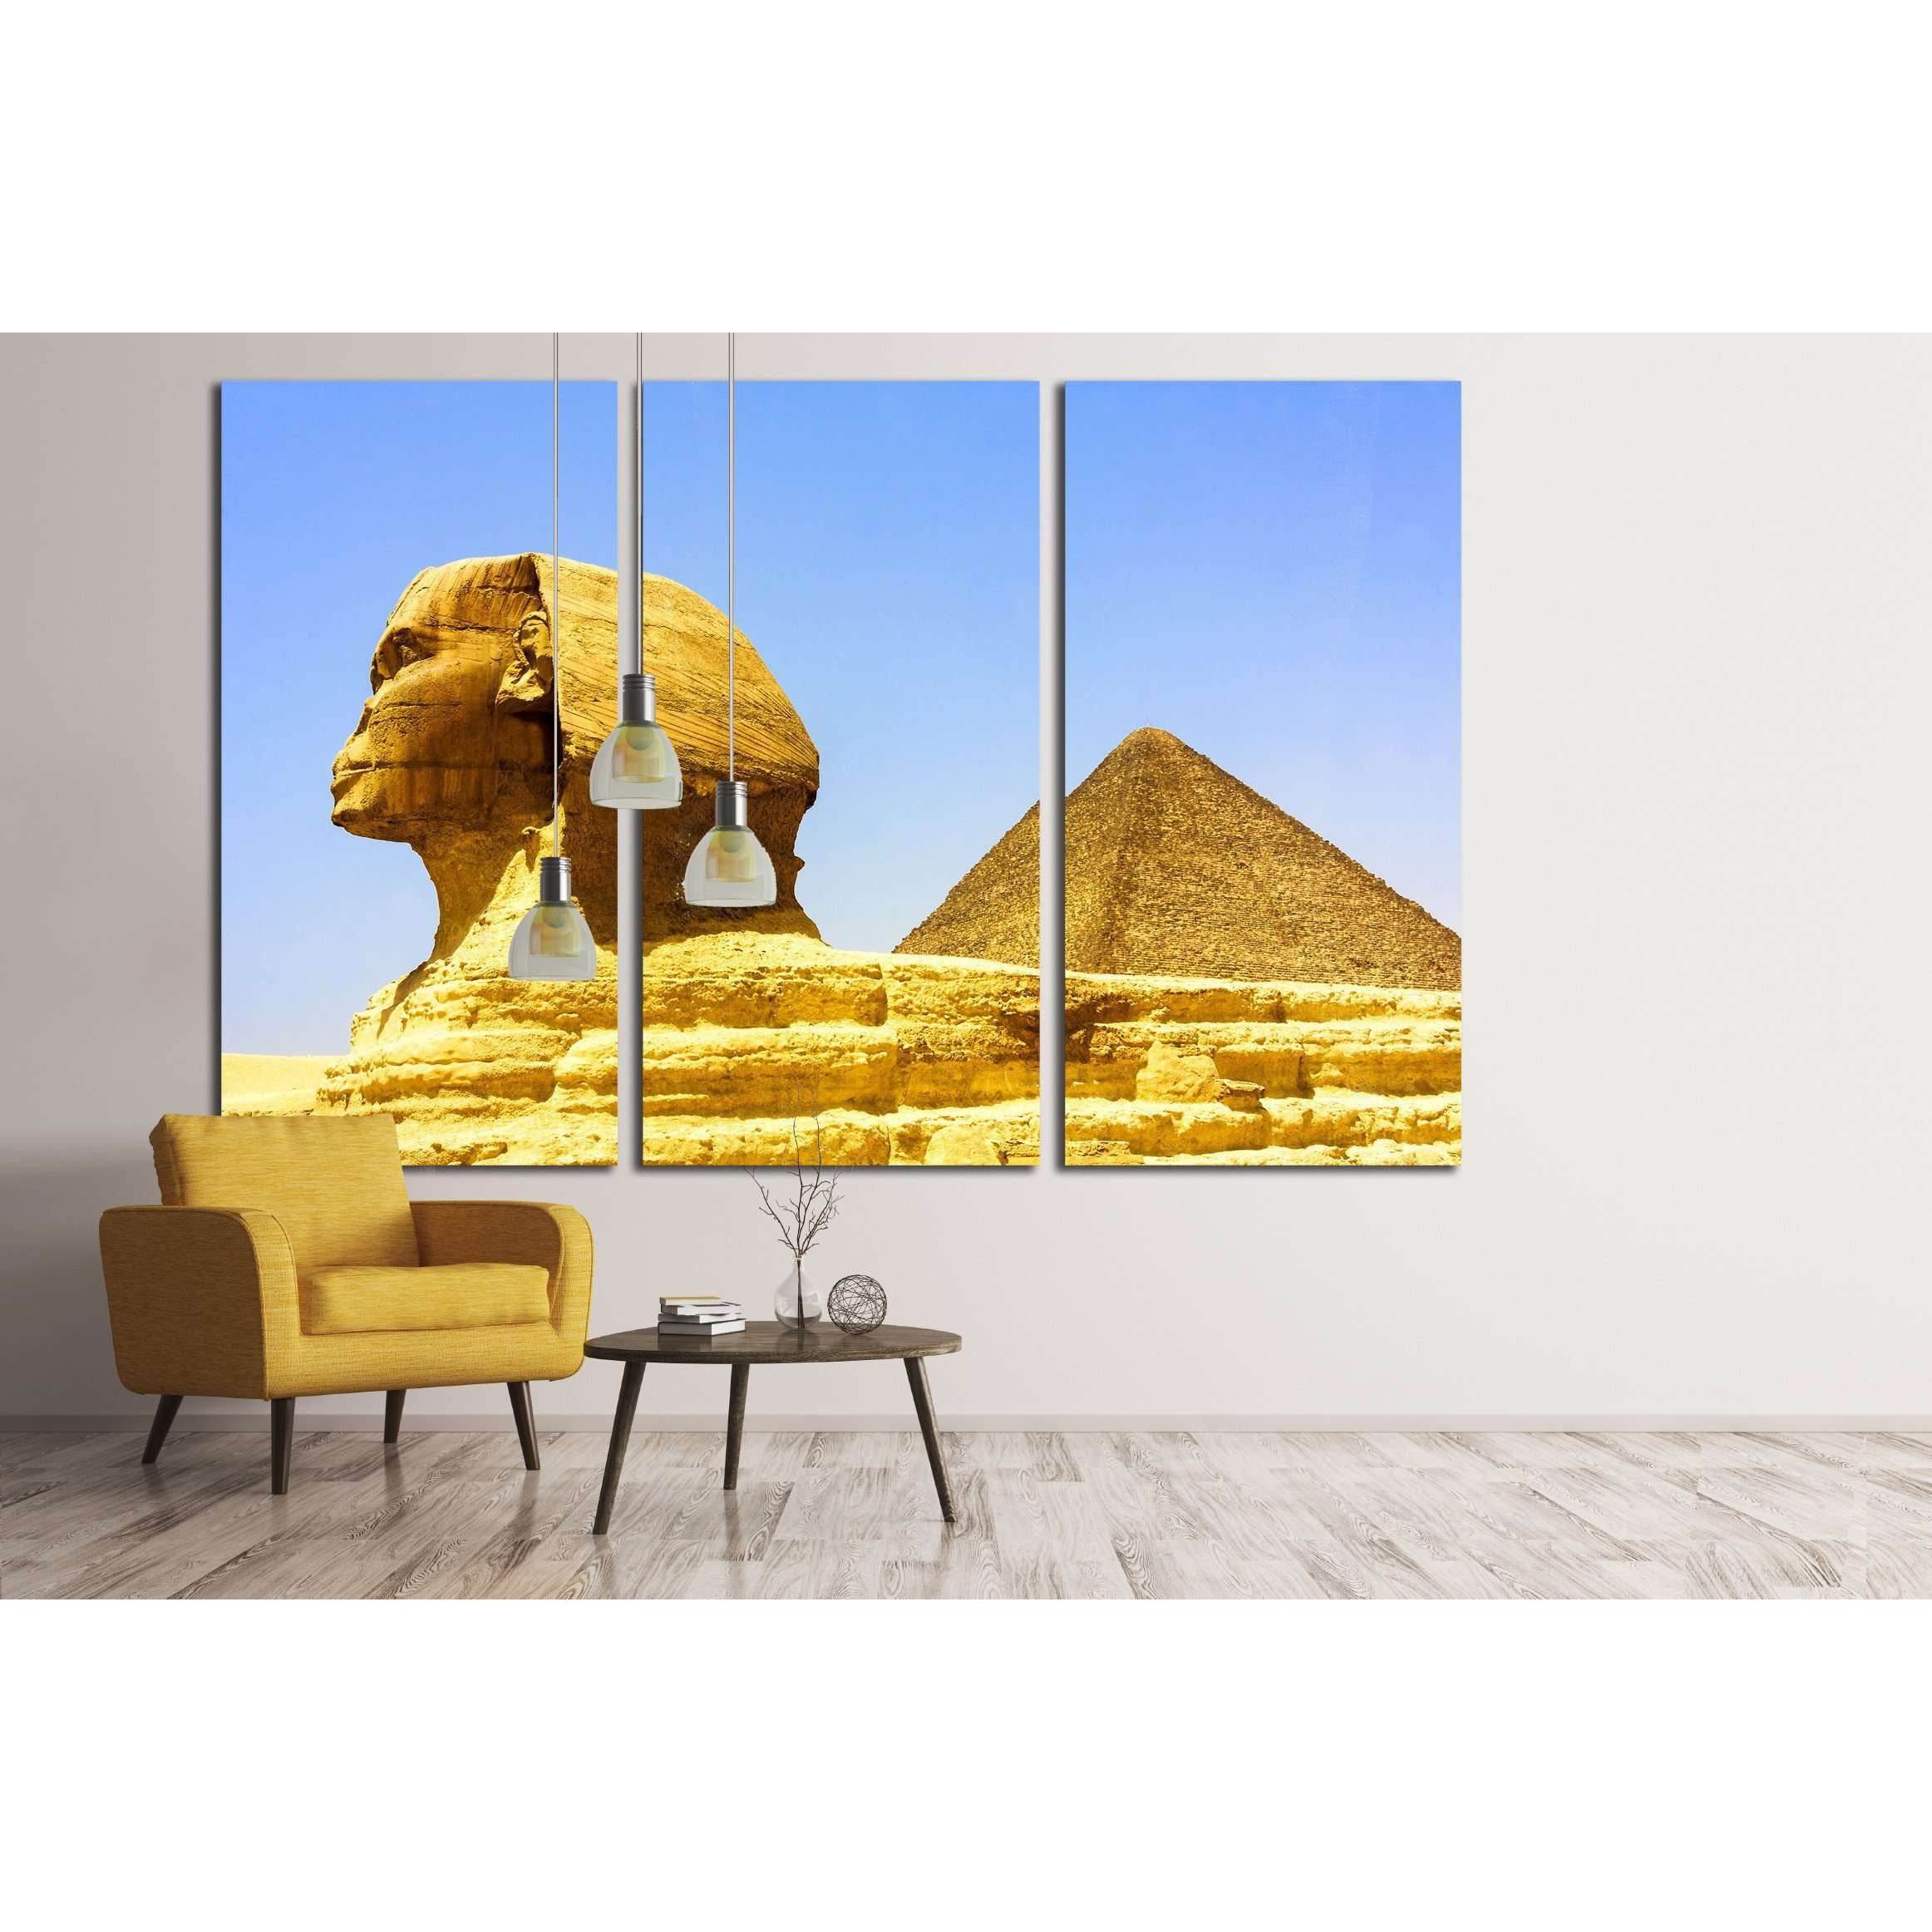 Egyptian pyramids in Giza №2199 Ready to Hang Canvas Print